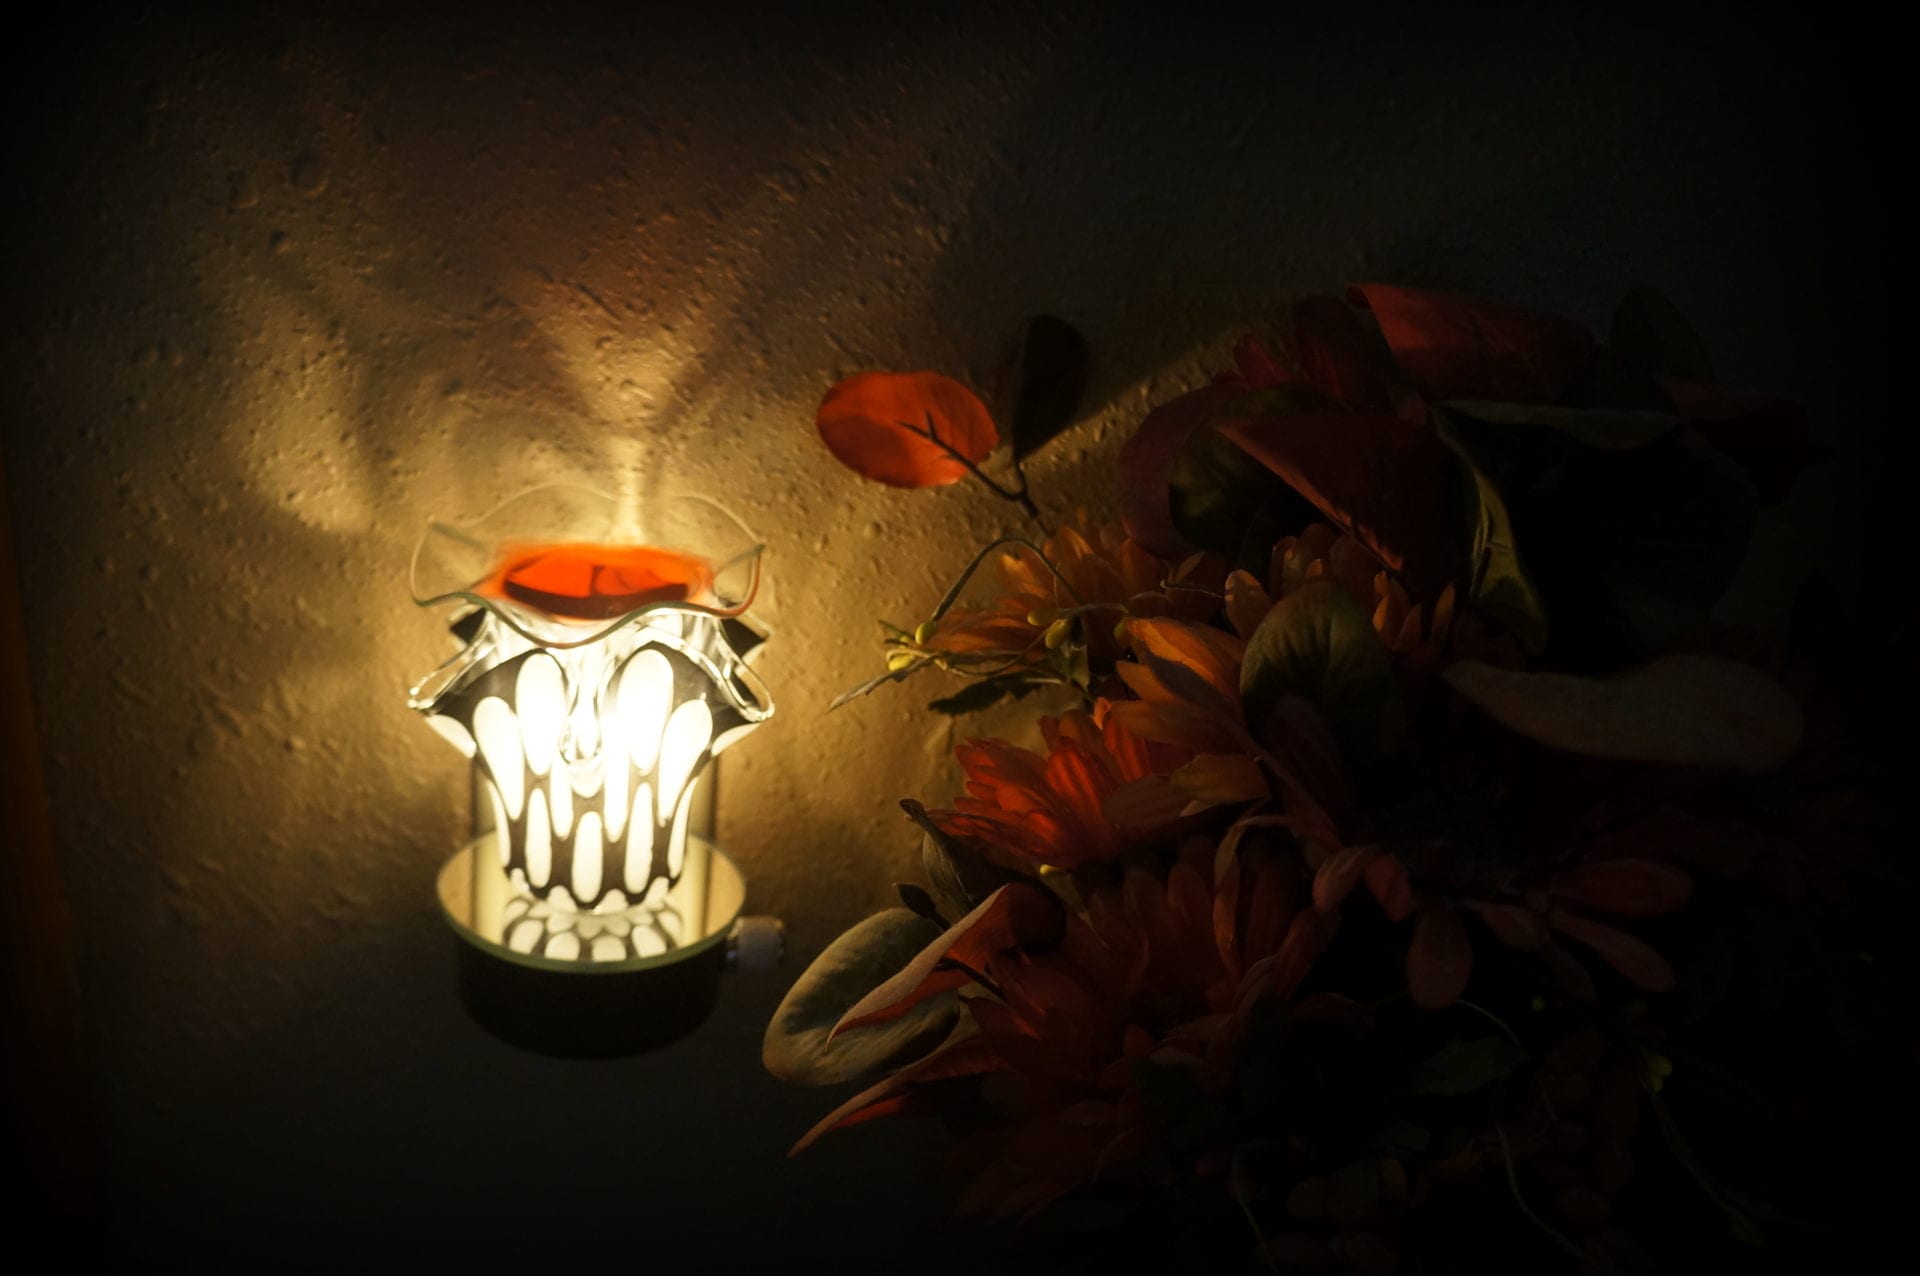 COOSA Crystal Wax Candle Warmer with 2 Light Bulbs,Fragrance Night